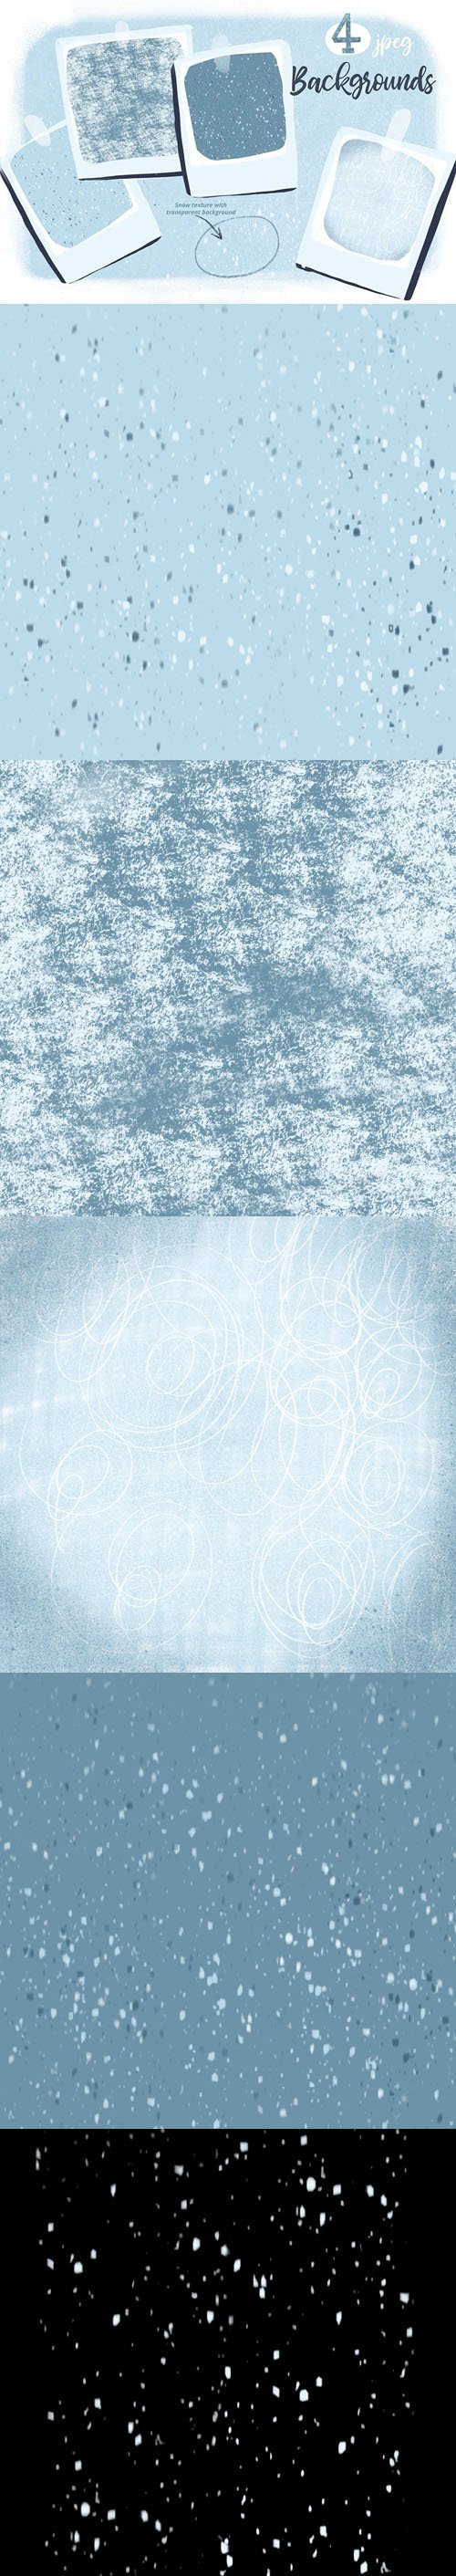 5 Snow Textures Backgrounds Set